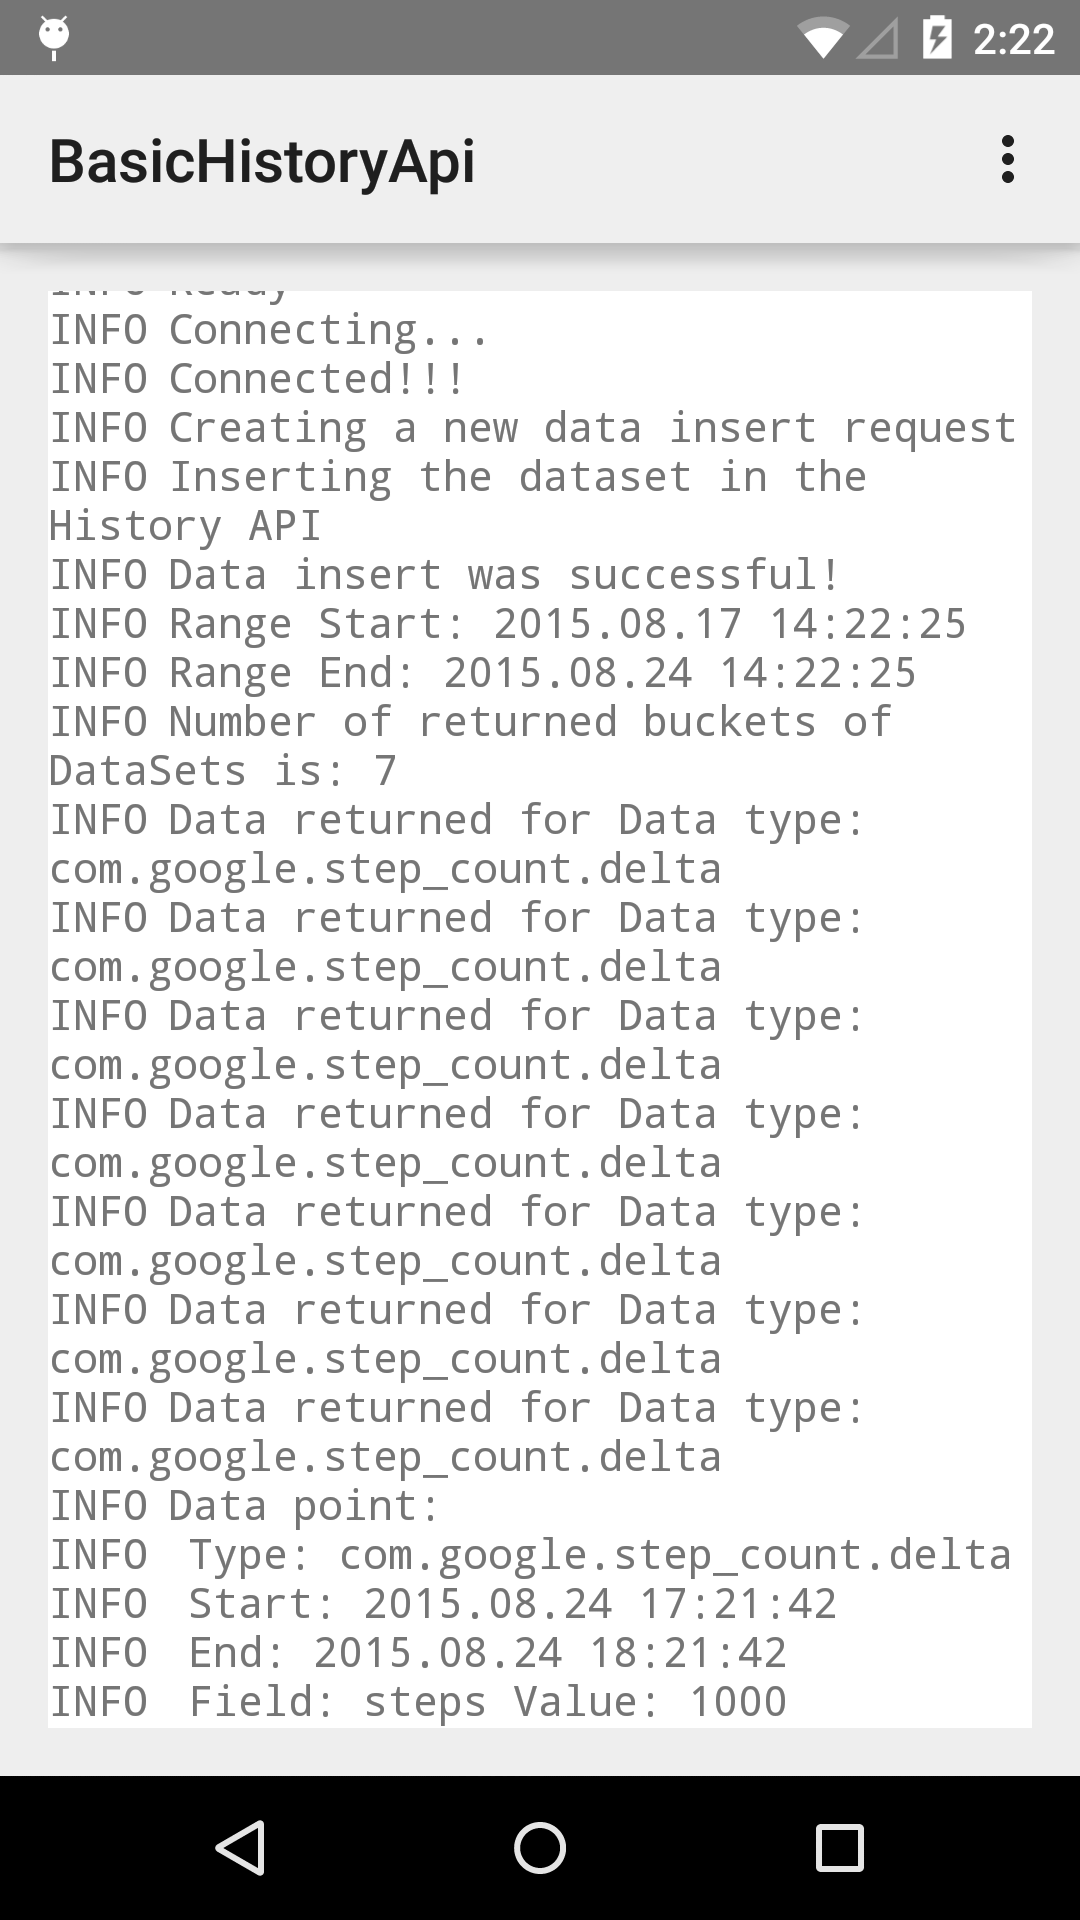 Data types, Google Fit